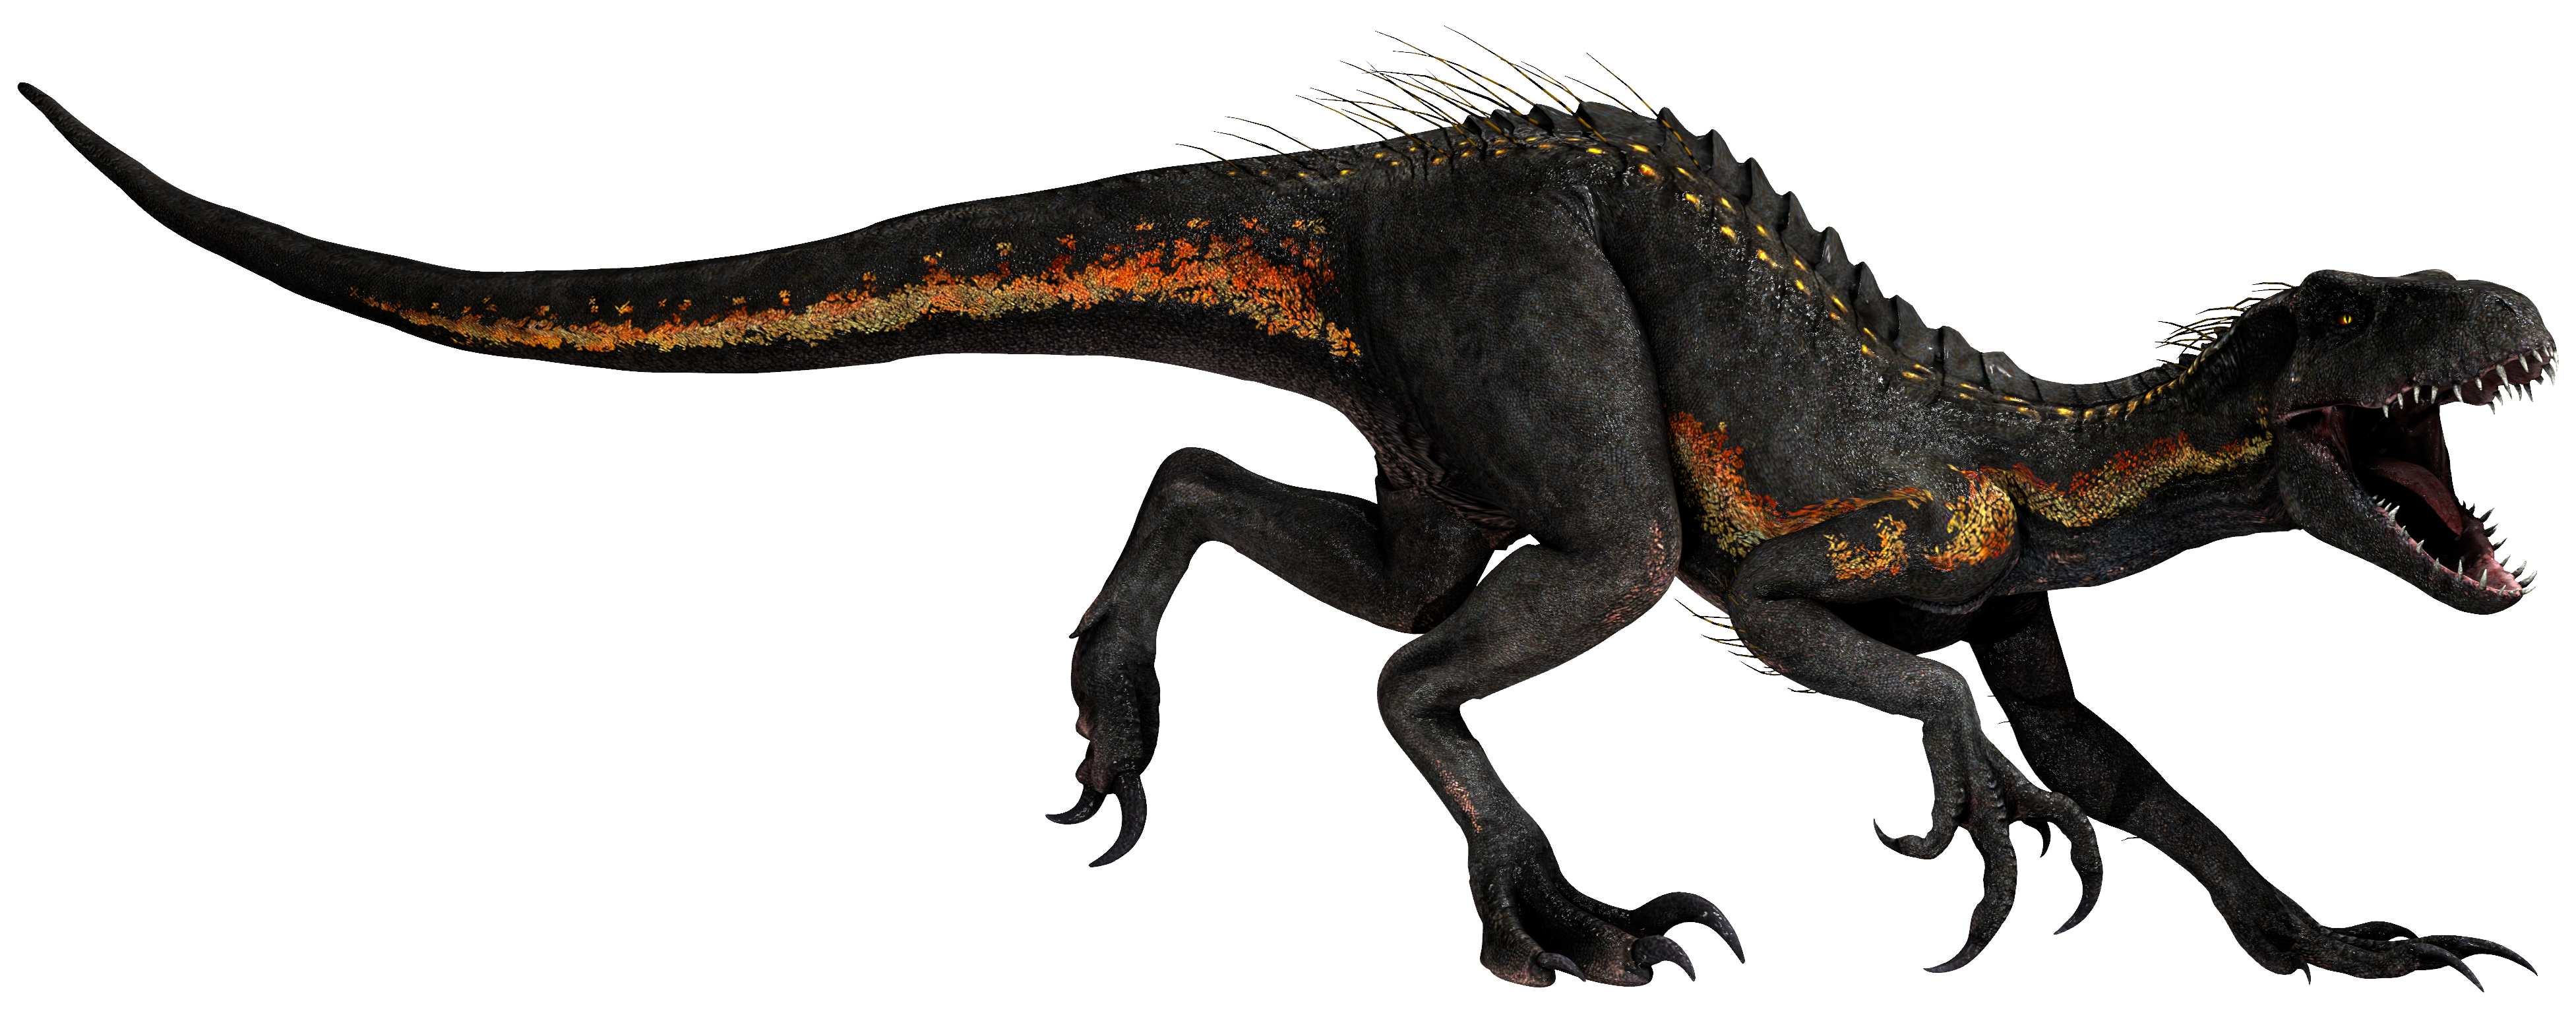 Jurassic World Indoraptor kills it as the new Fallen Kingdom dino